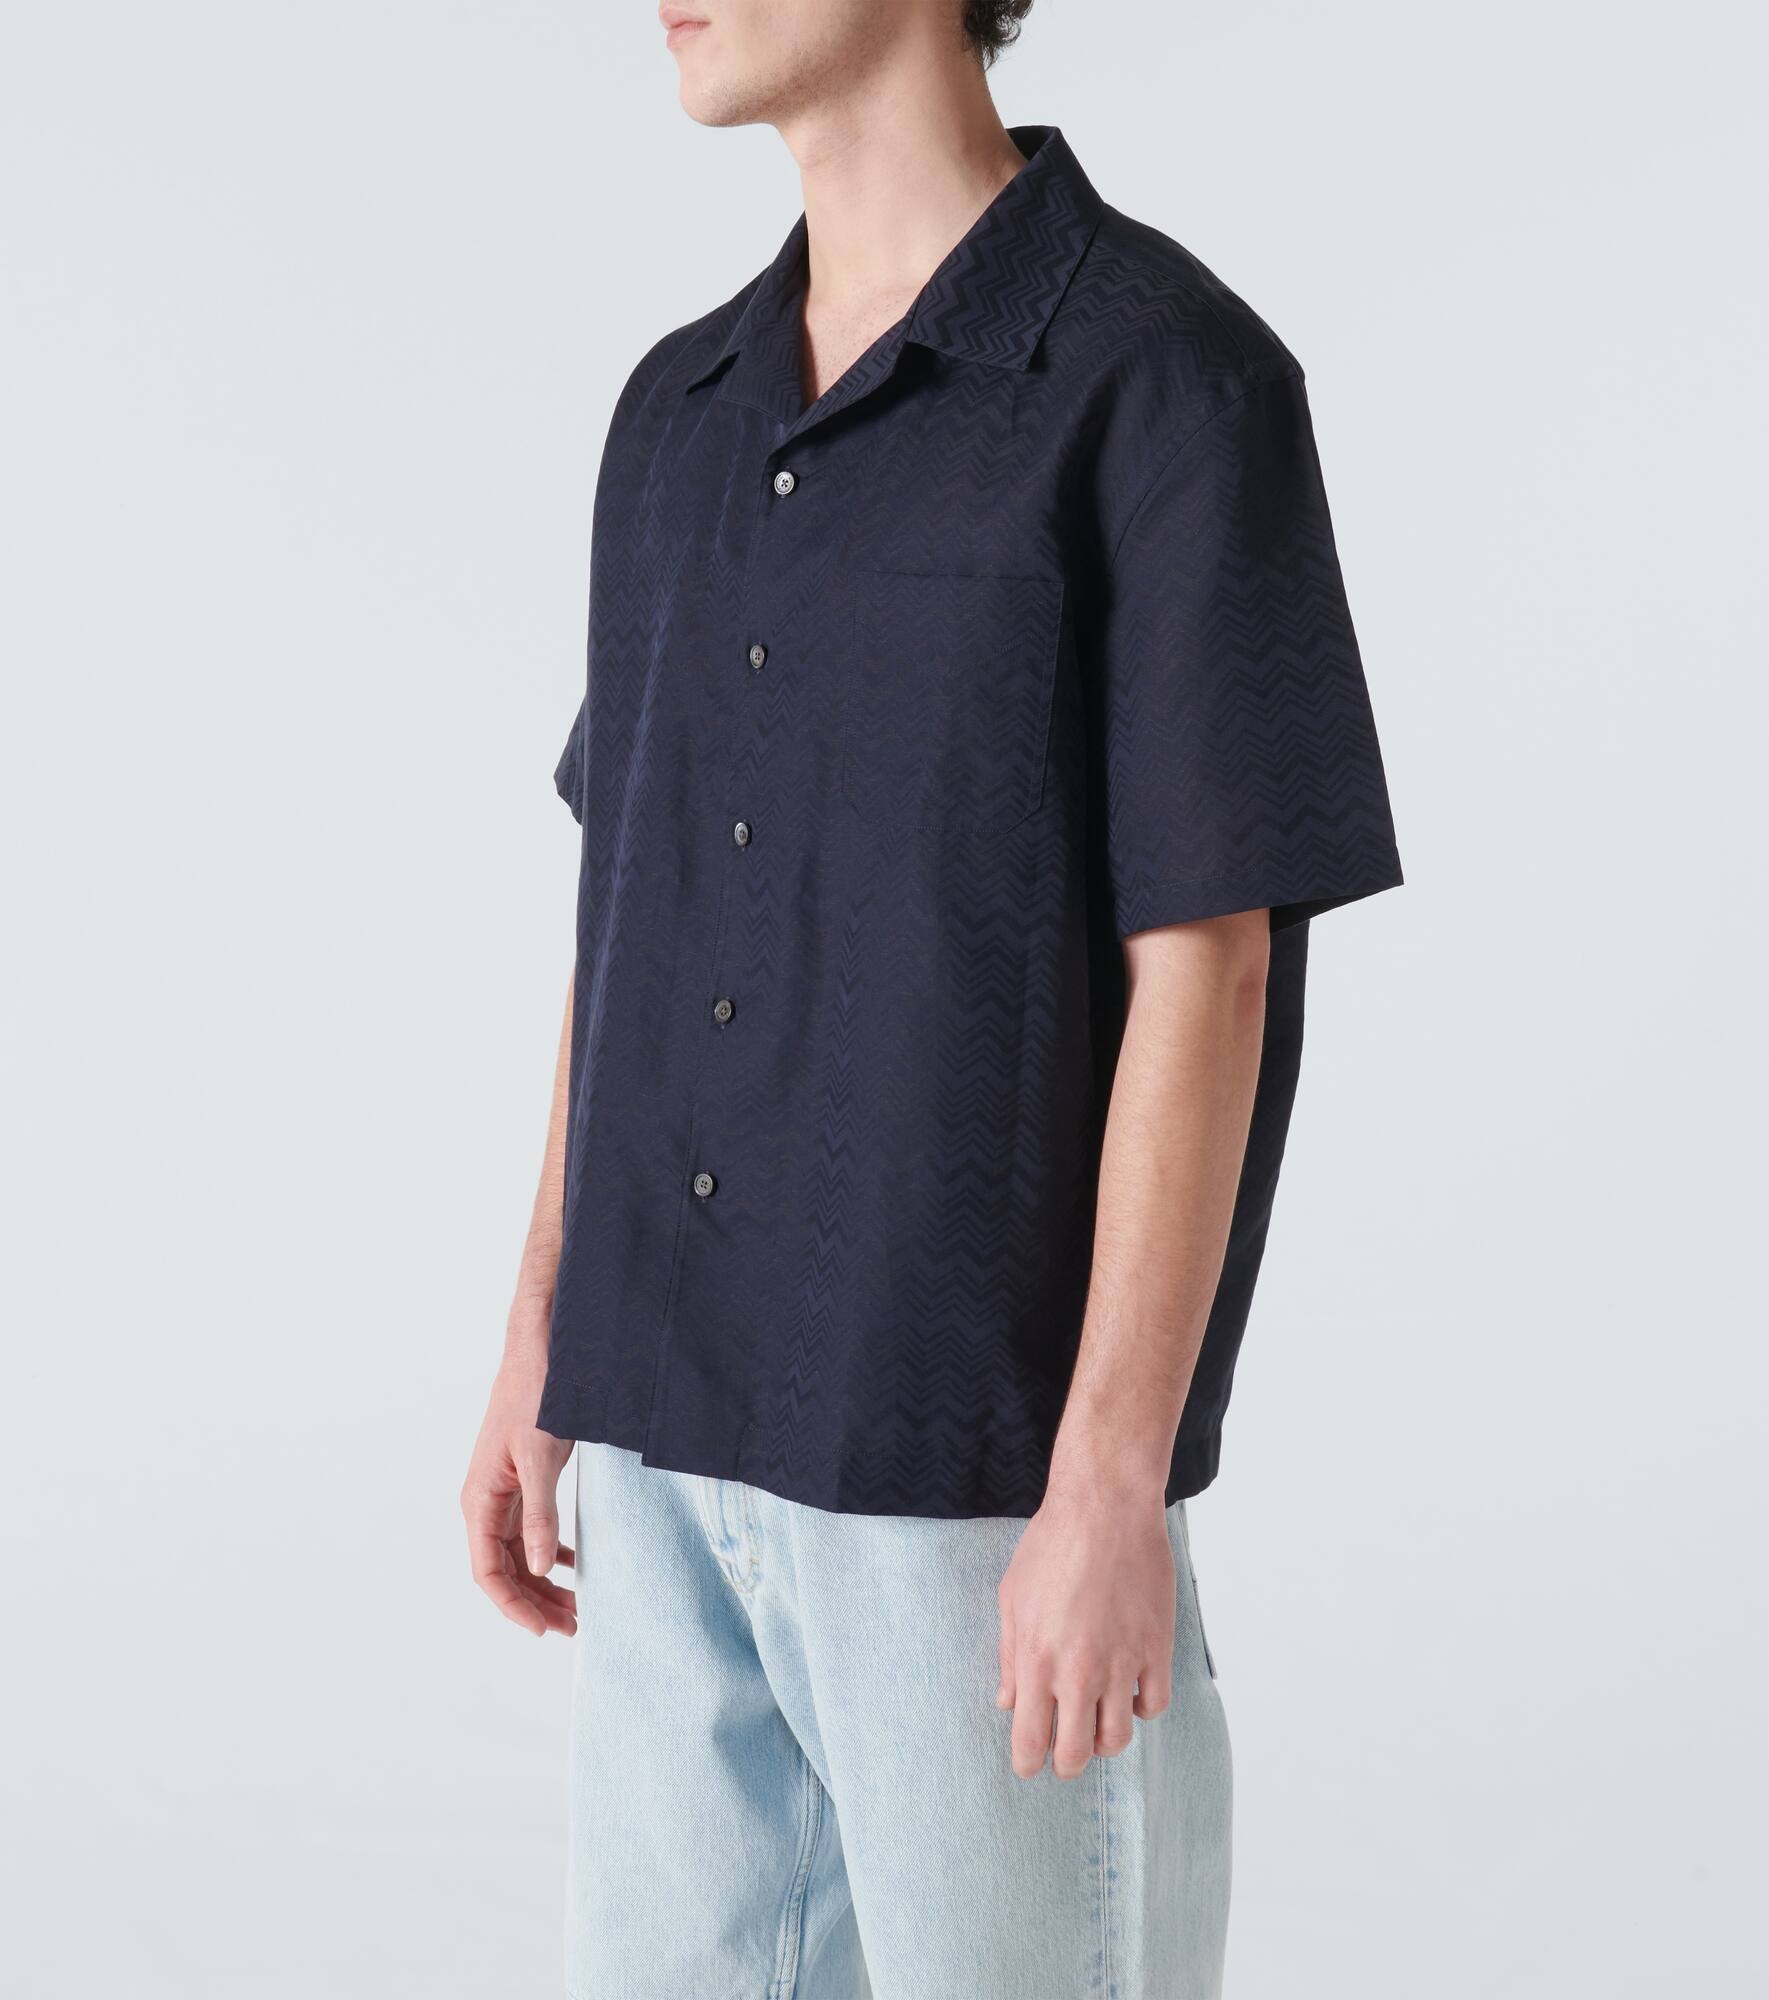 Cotton and linen bowling shirt - 3